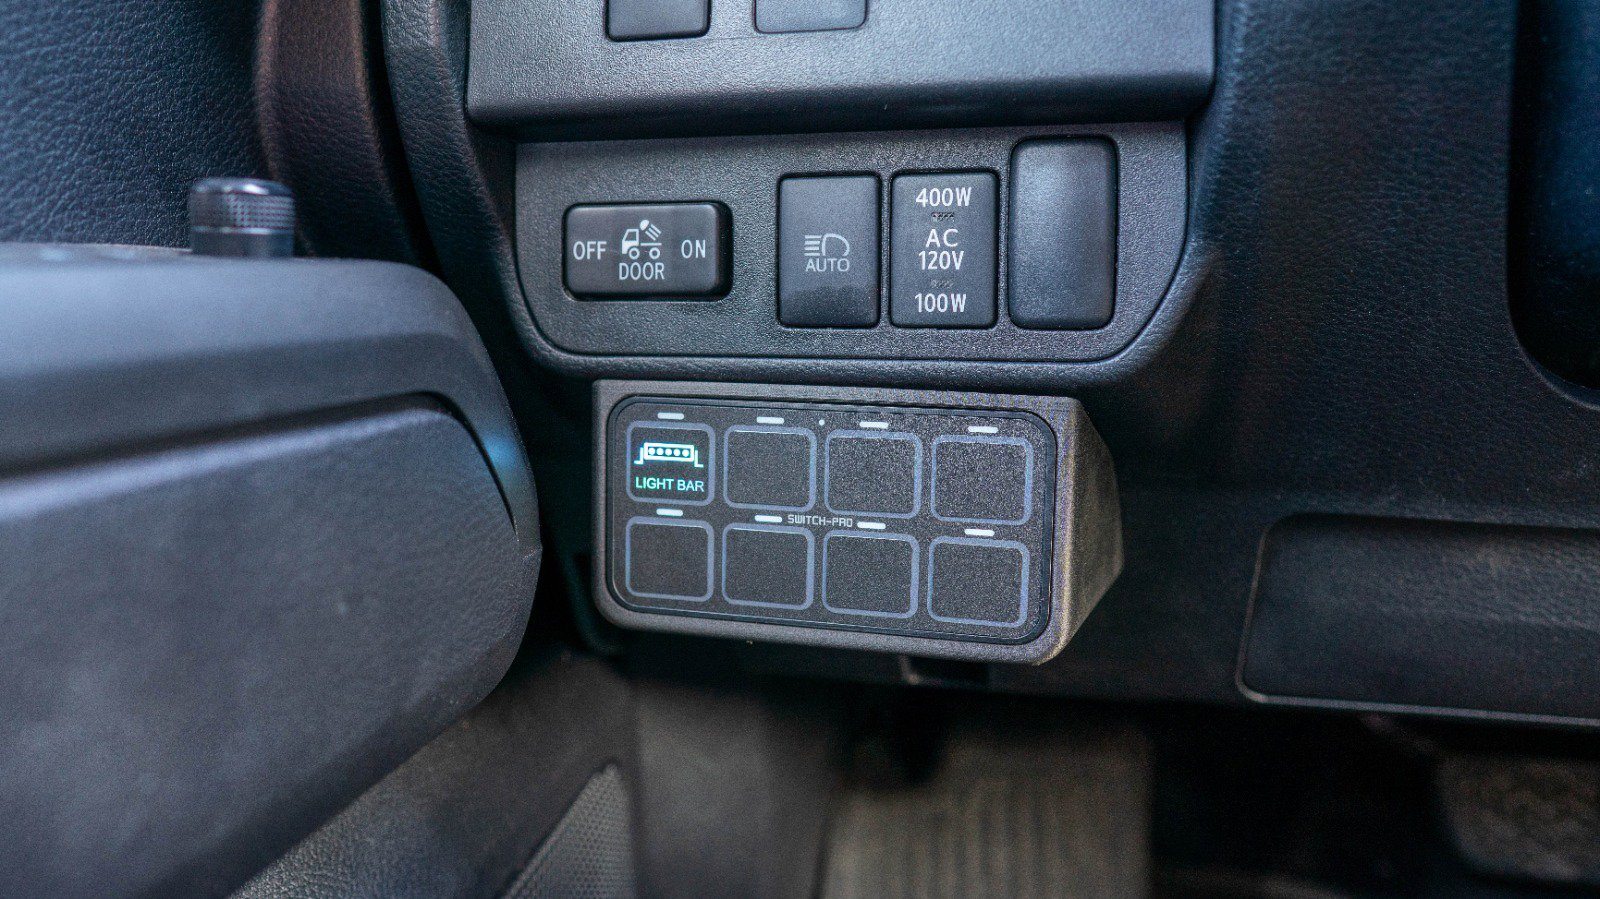 '16-23 Toyota Tacoma SDHQ Built Switch Pros SP-9100 Keypad Mount Lighting SDHQ Off Road